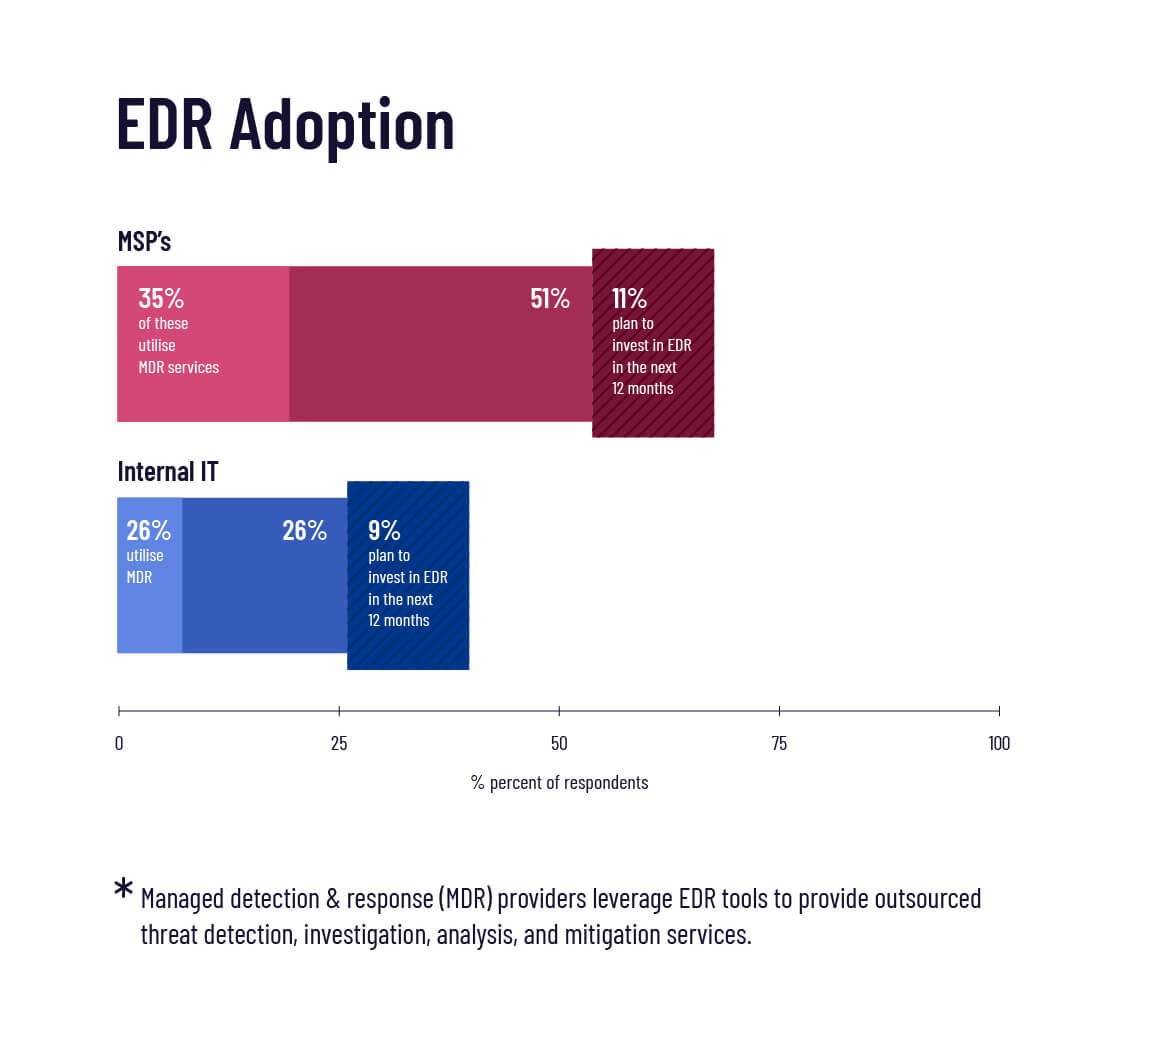 EDR adoption statistics 2019